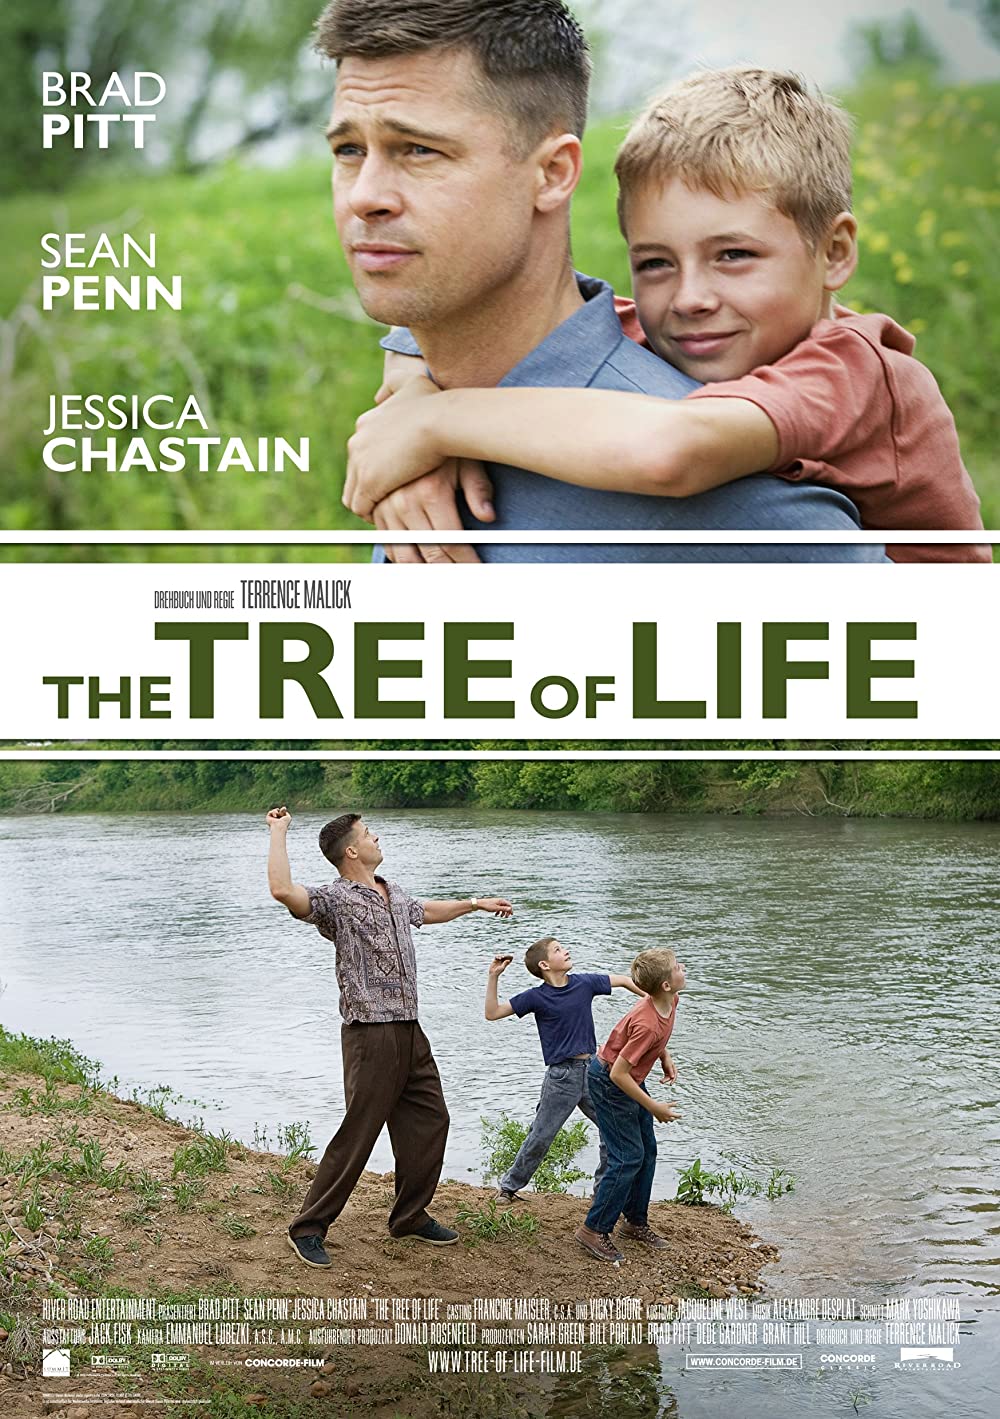 Filmbeschreibung zu The Tree of Life (OV)